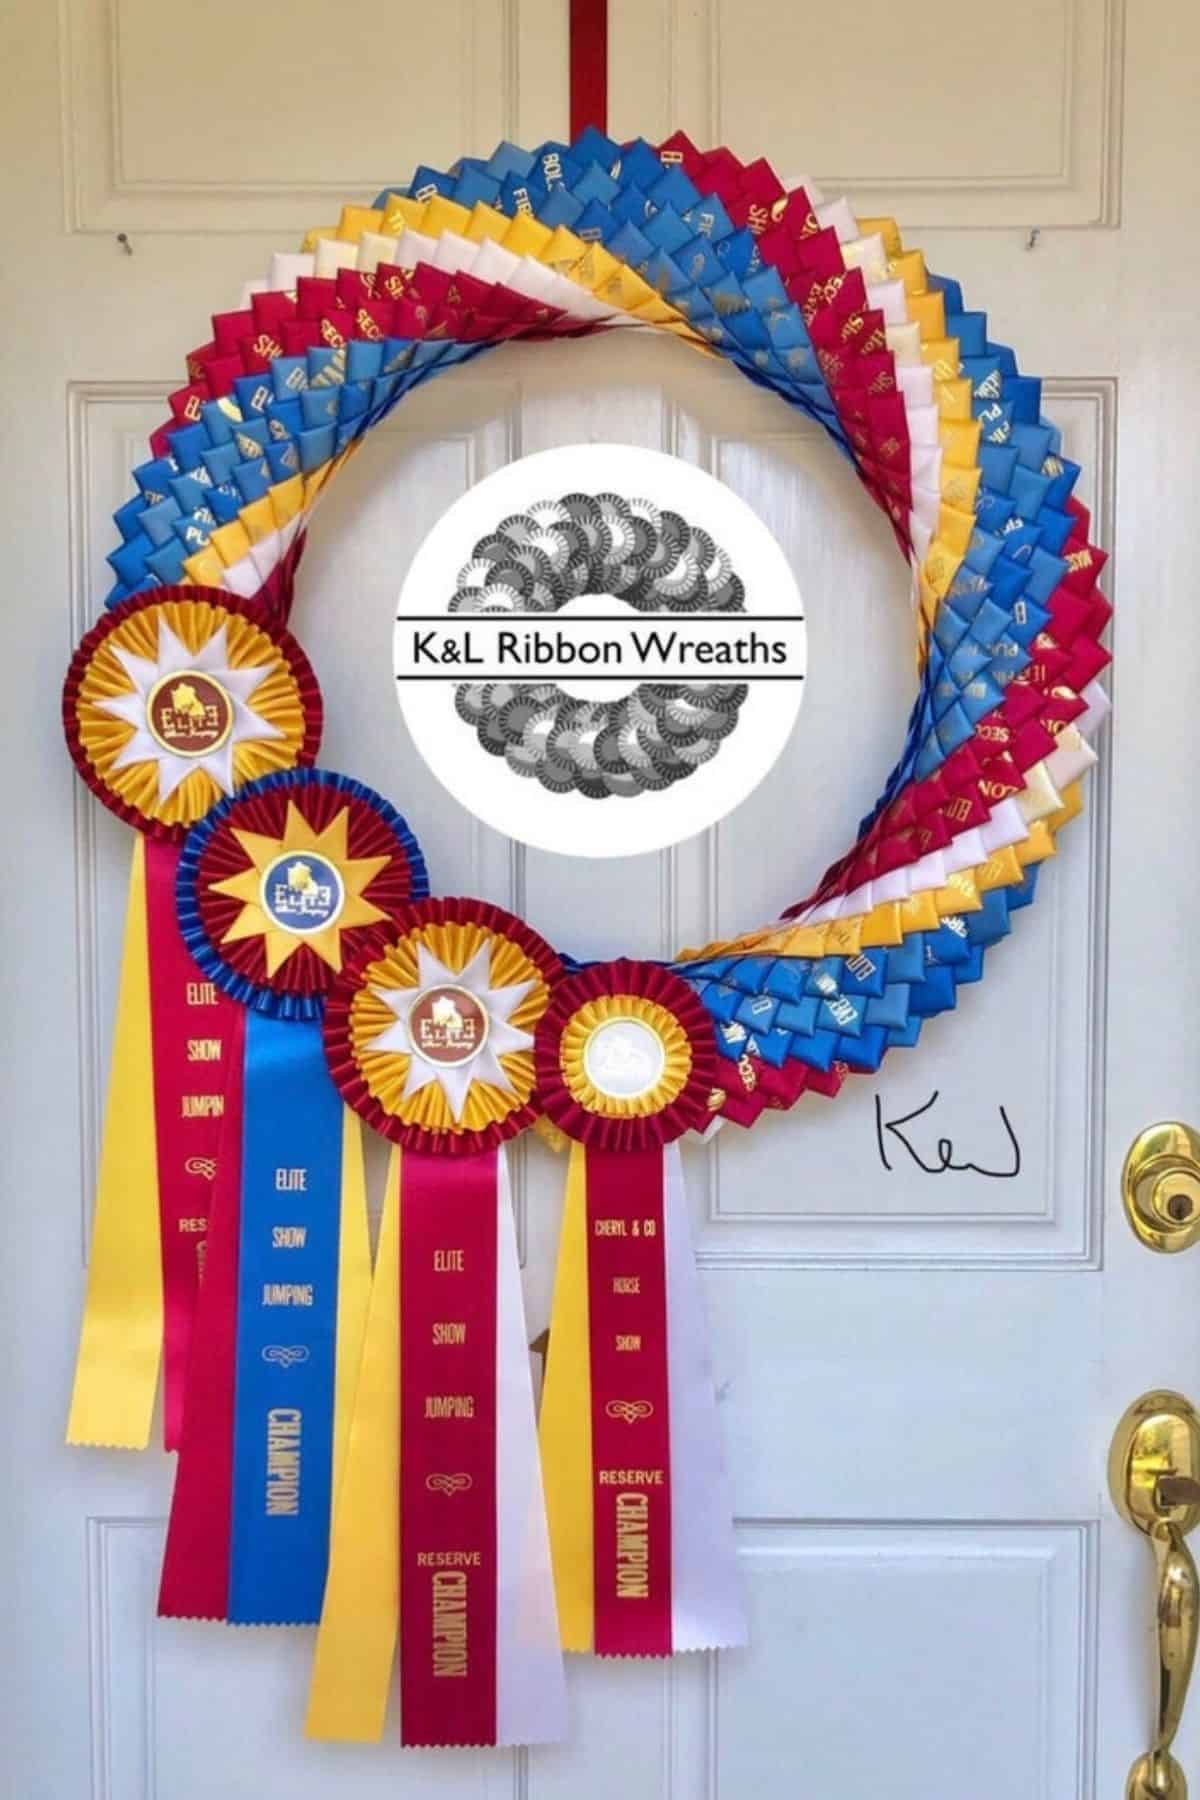 Show ribbon wreath